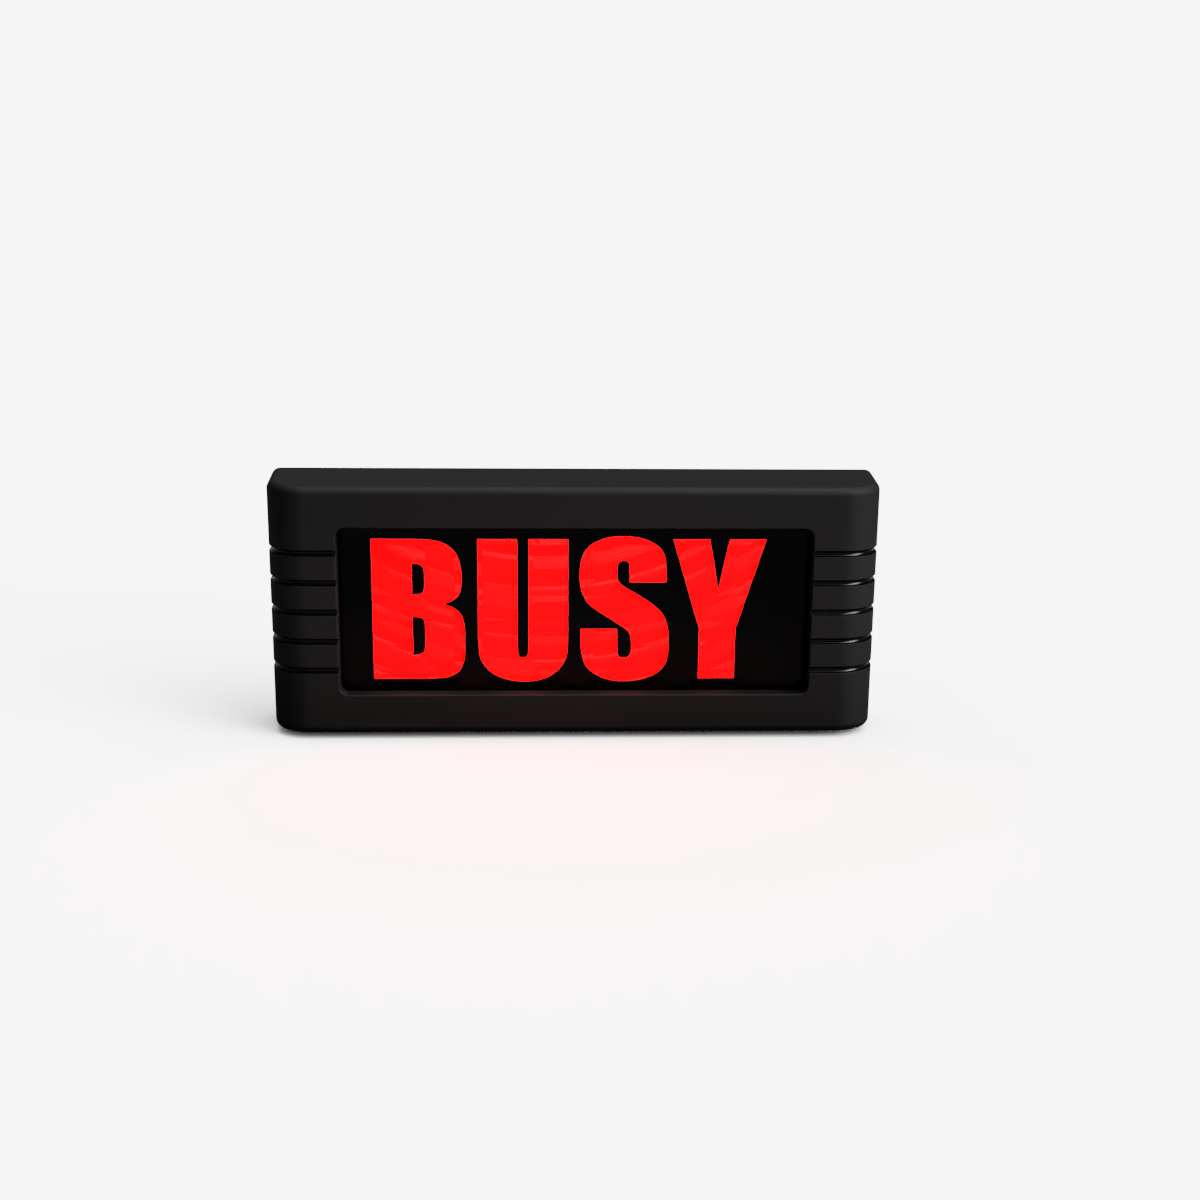  BusyBox S smart Bluetooth Sign, 5,000 mAH Battery